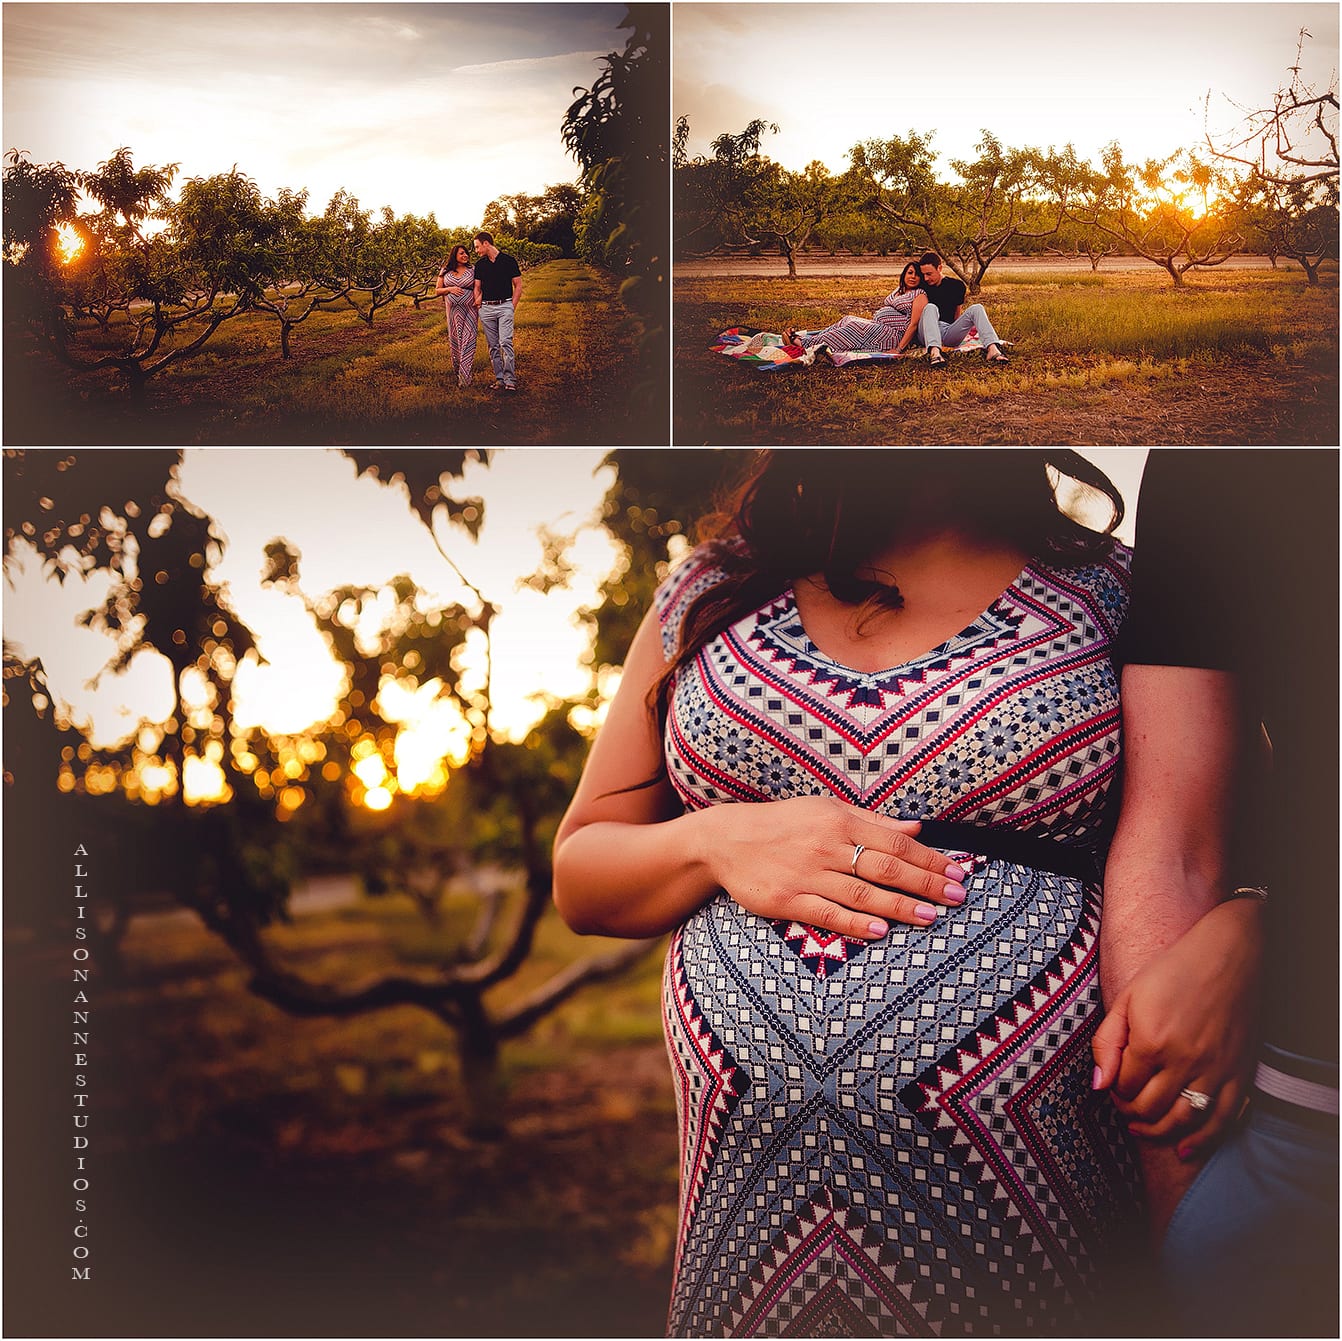 New Client, first child, peach orchard, Destination Maternity, maternity session, Best SJ Photographer, AllisonAnne Studios, best maternity photographer